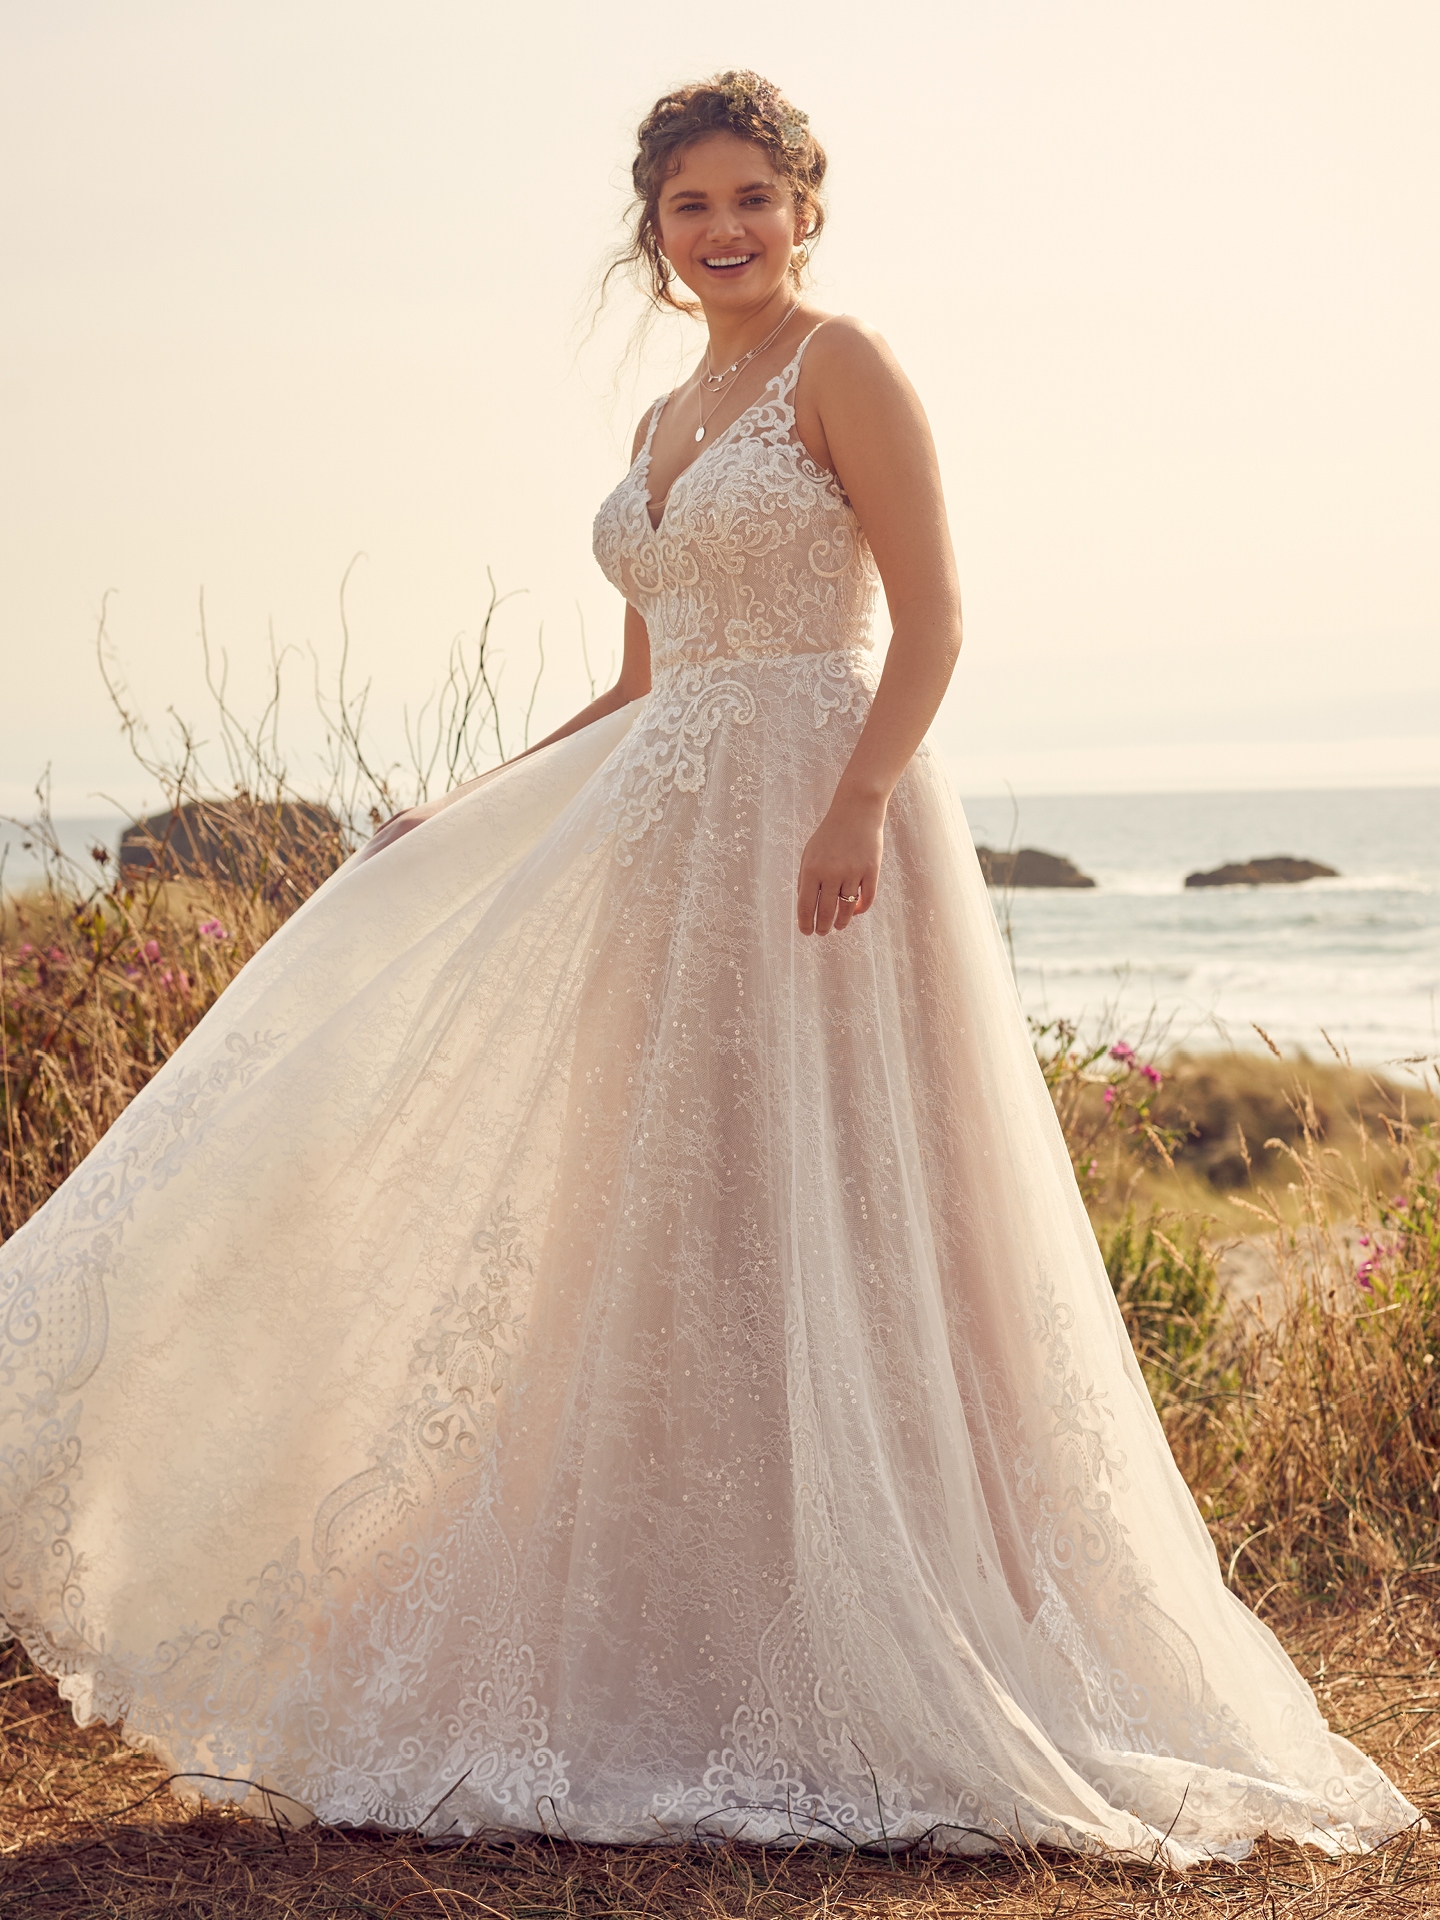 Bride Wearing Romantic A-line Wedding Dress Called Shauna by Rebecca Ingram